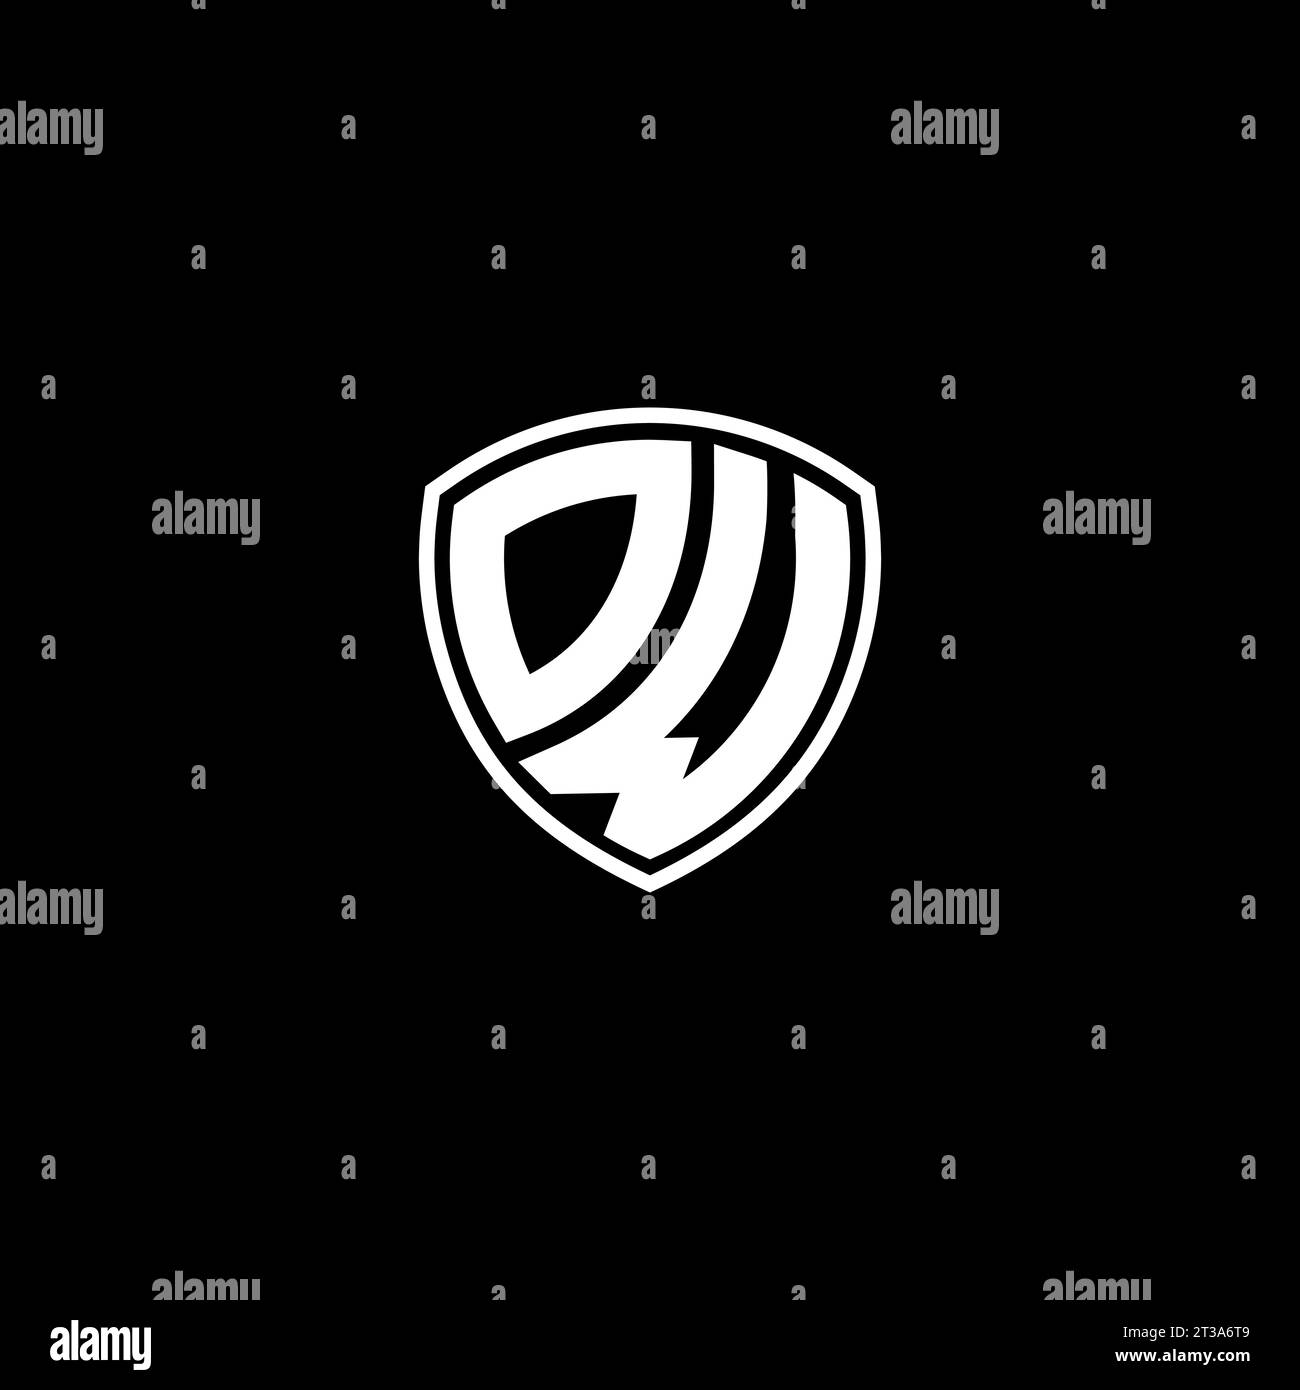 DW logo monogram emblem style with shield shape design template ideas Stock Vector